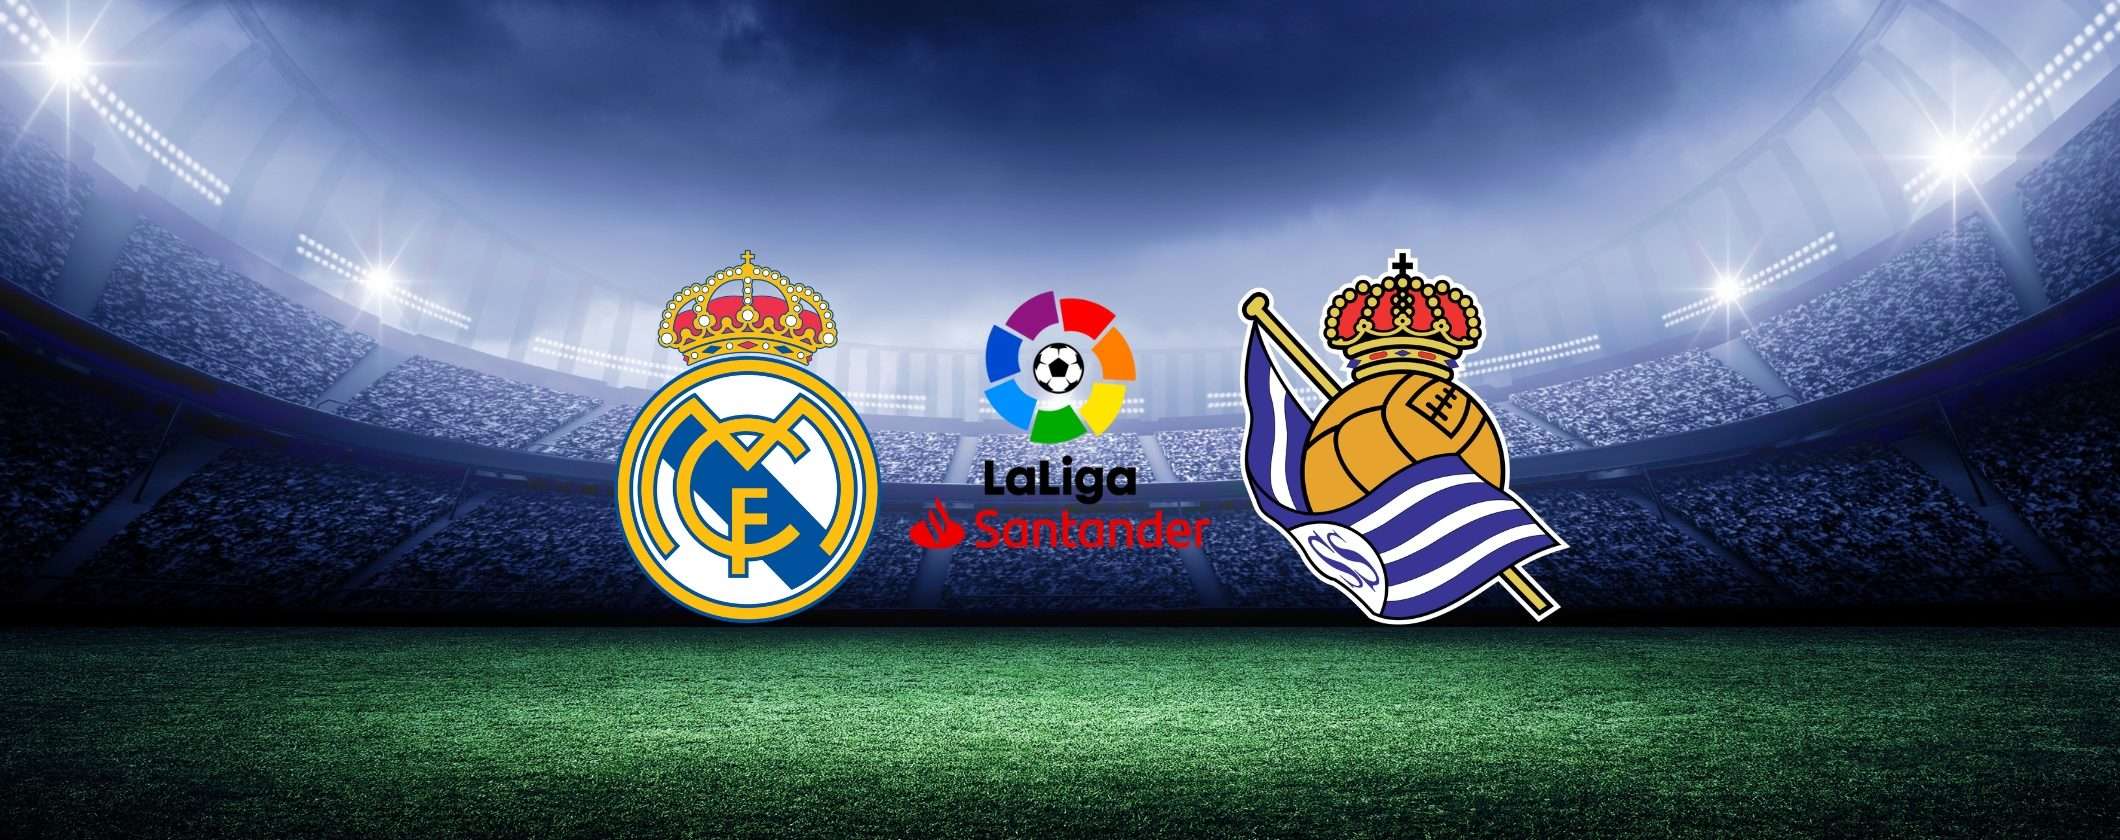 Guarda Real Madrid-Real Sociedad in streaming anche dall'estero